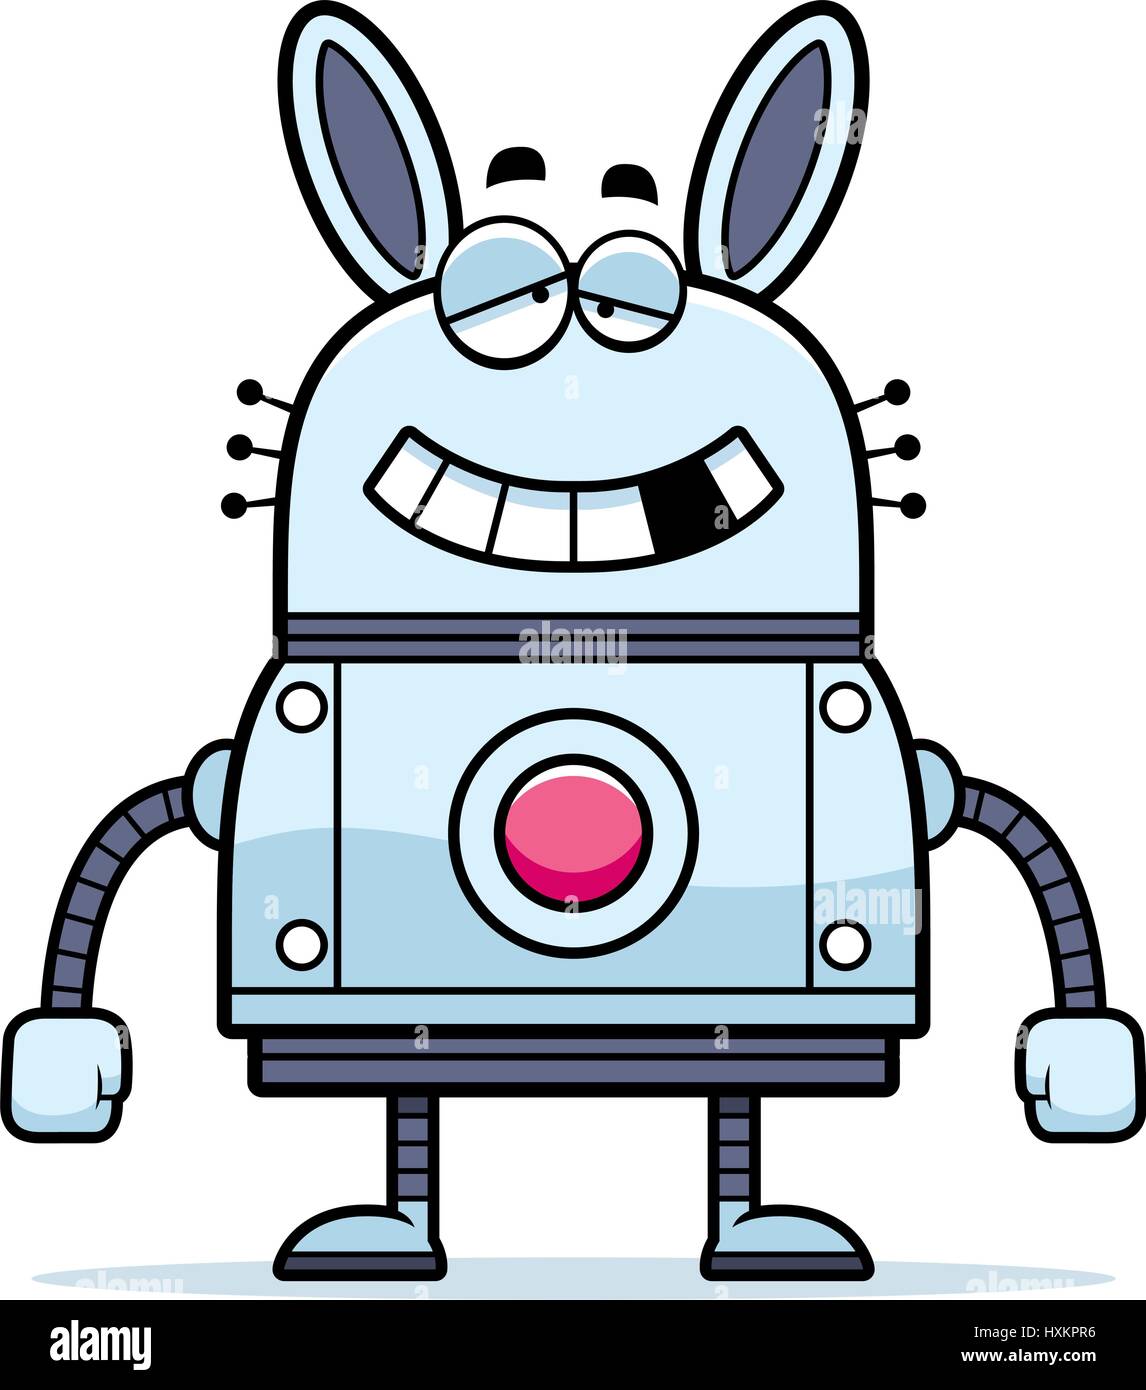 A cartoon illustration of a malfunctioning robot rabbit. Stock Vector